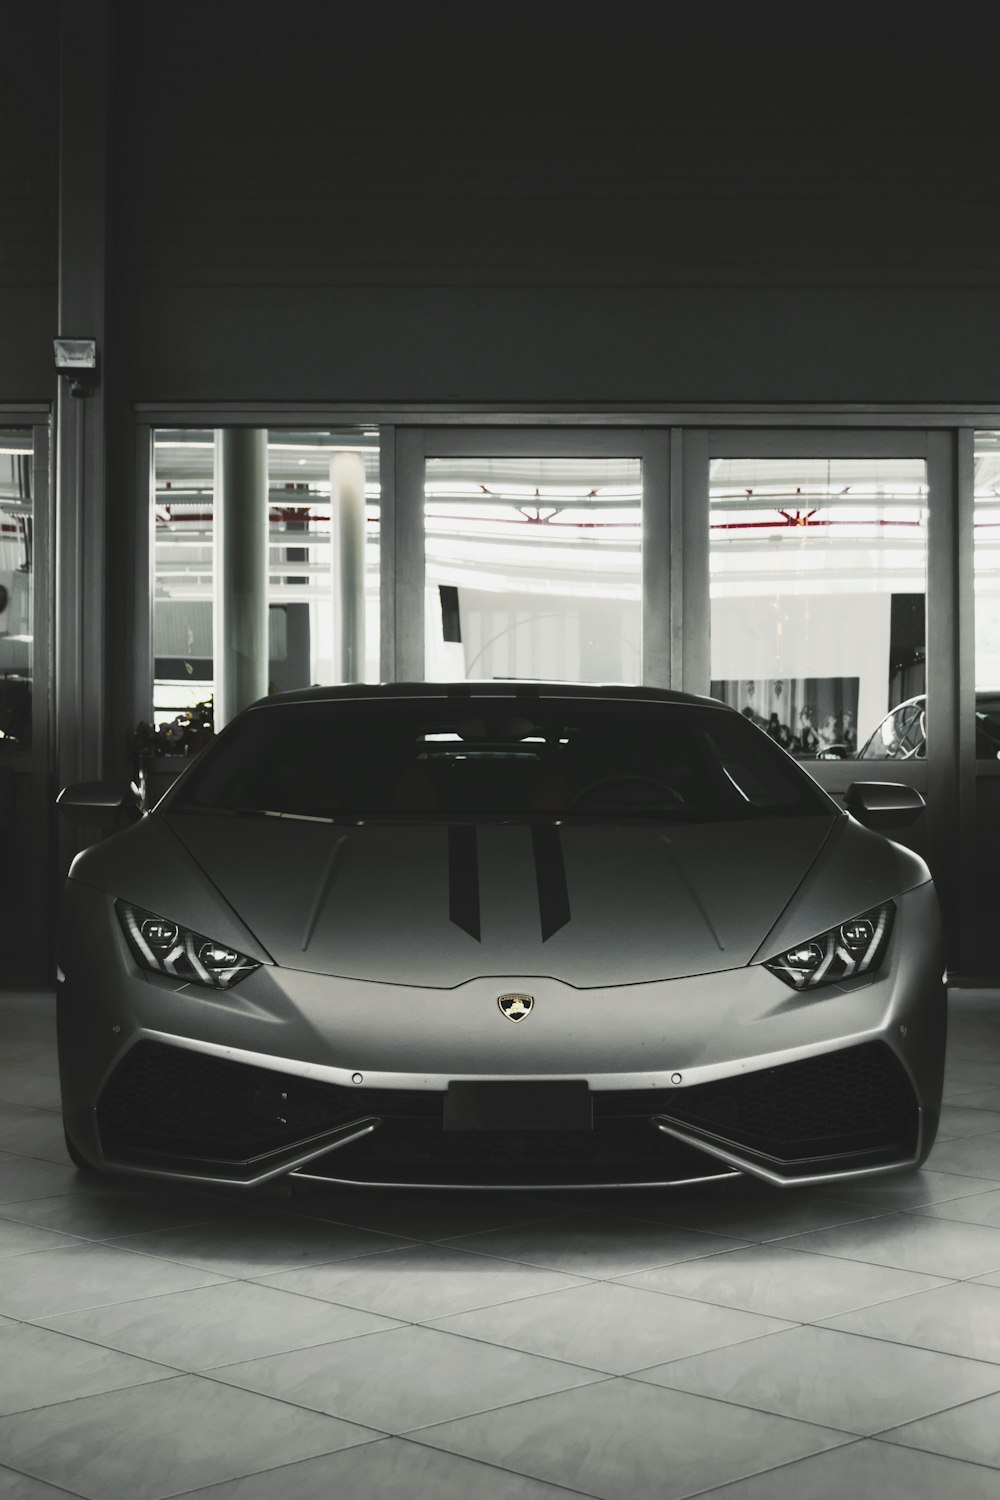 Lamborghini Cars Wallpaper For Android